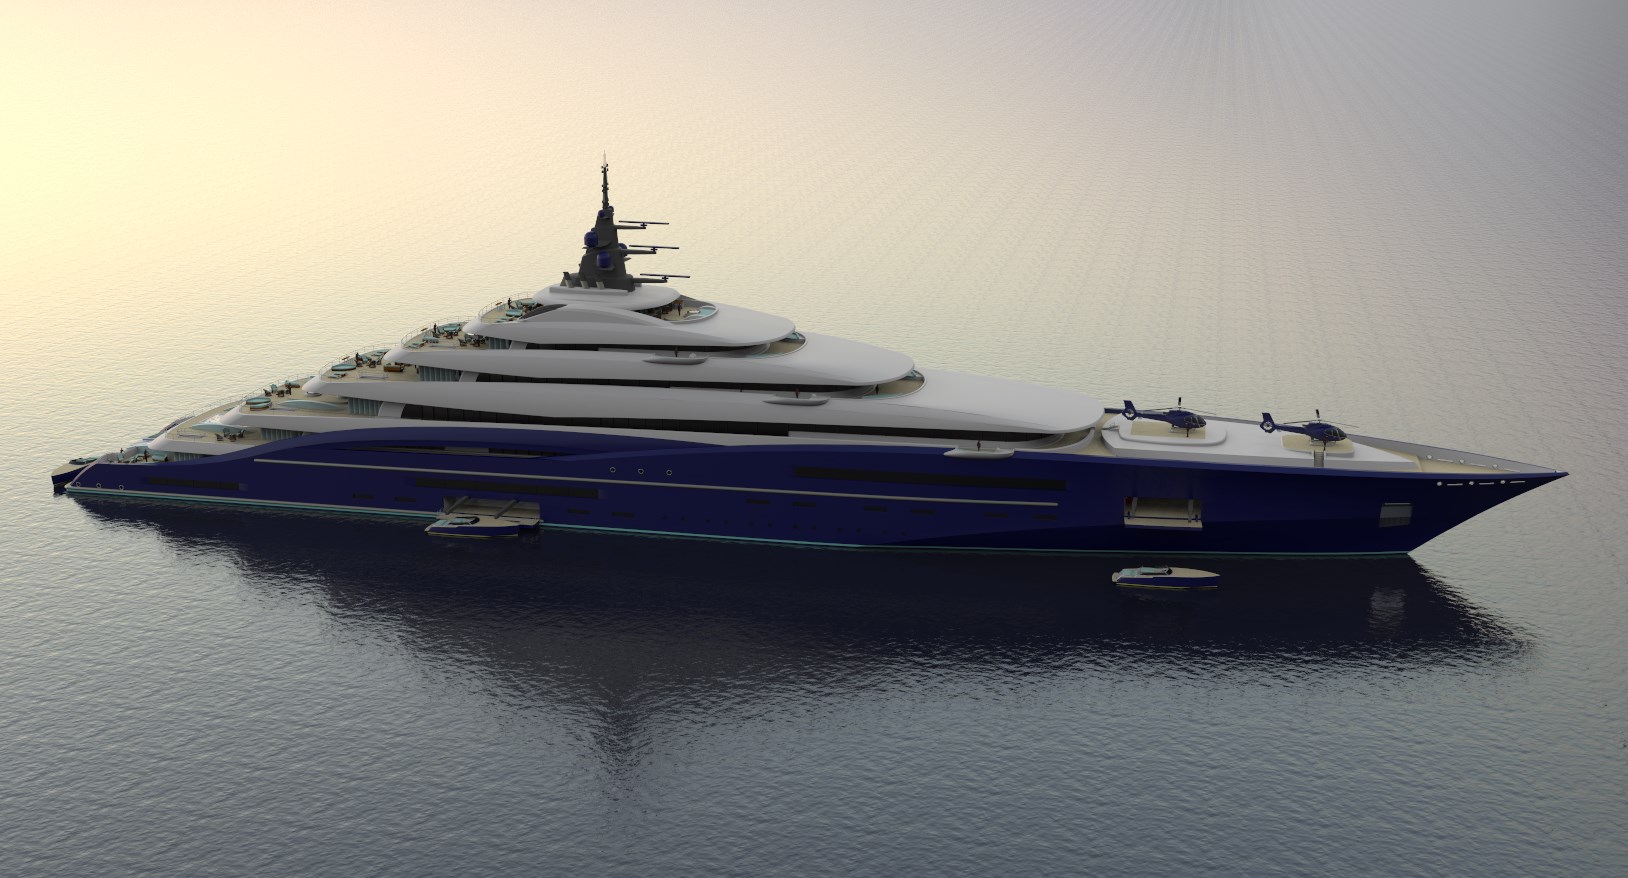 200 million pound yacht